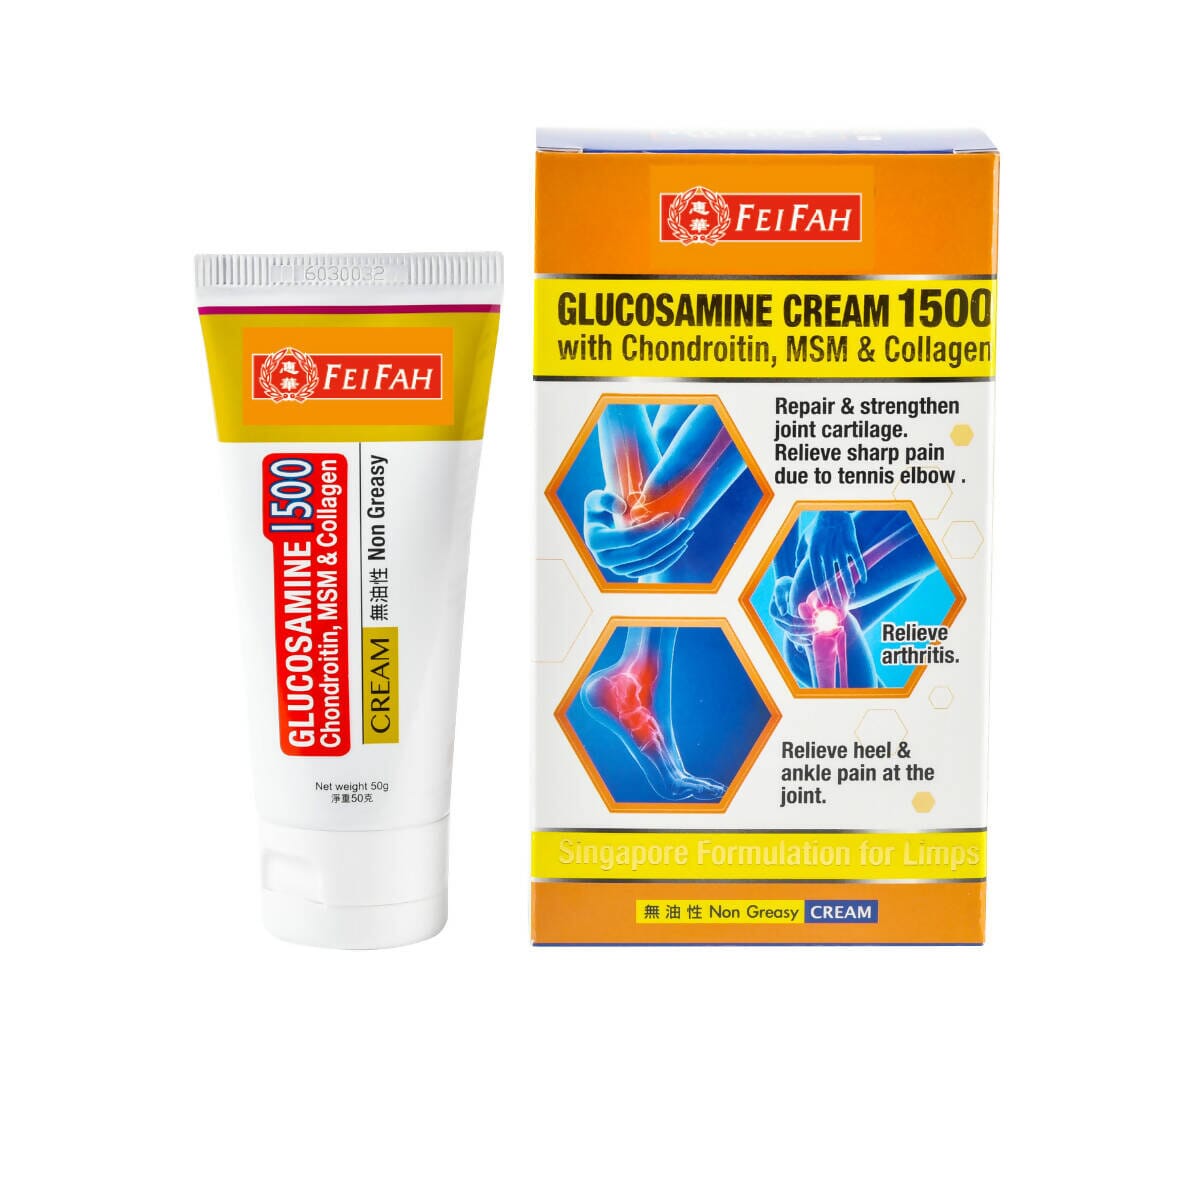 Glucosamine Cream 1500 50g w/Chondroitin, MSM & Collagen New Arrivals Fei Fah 